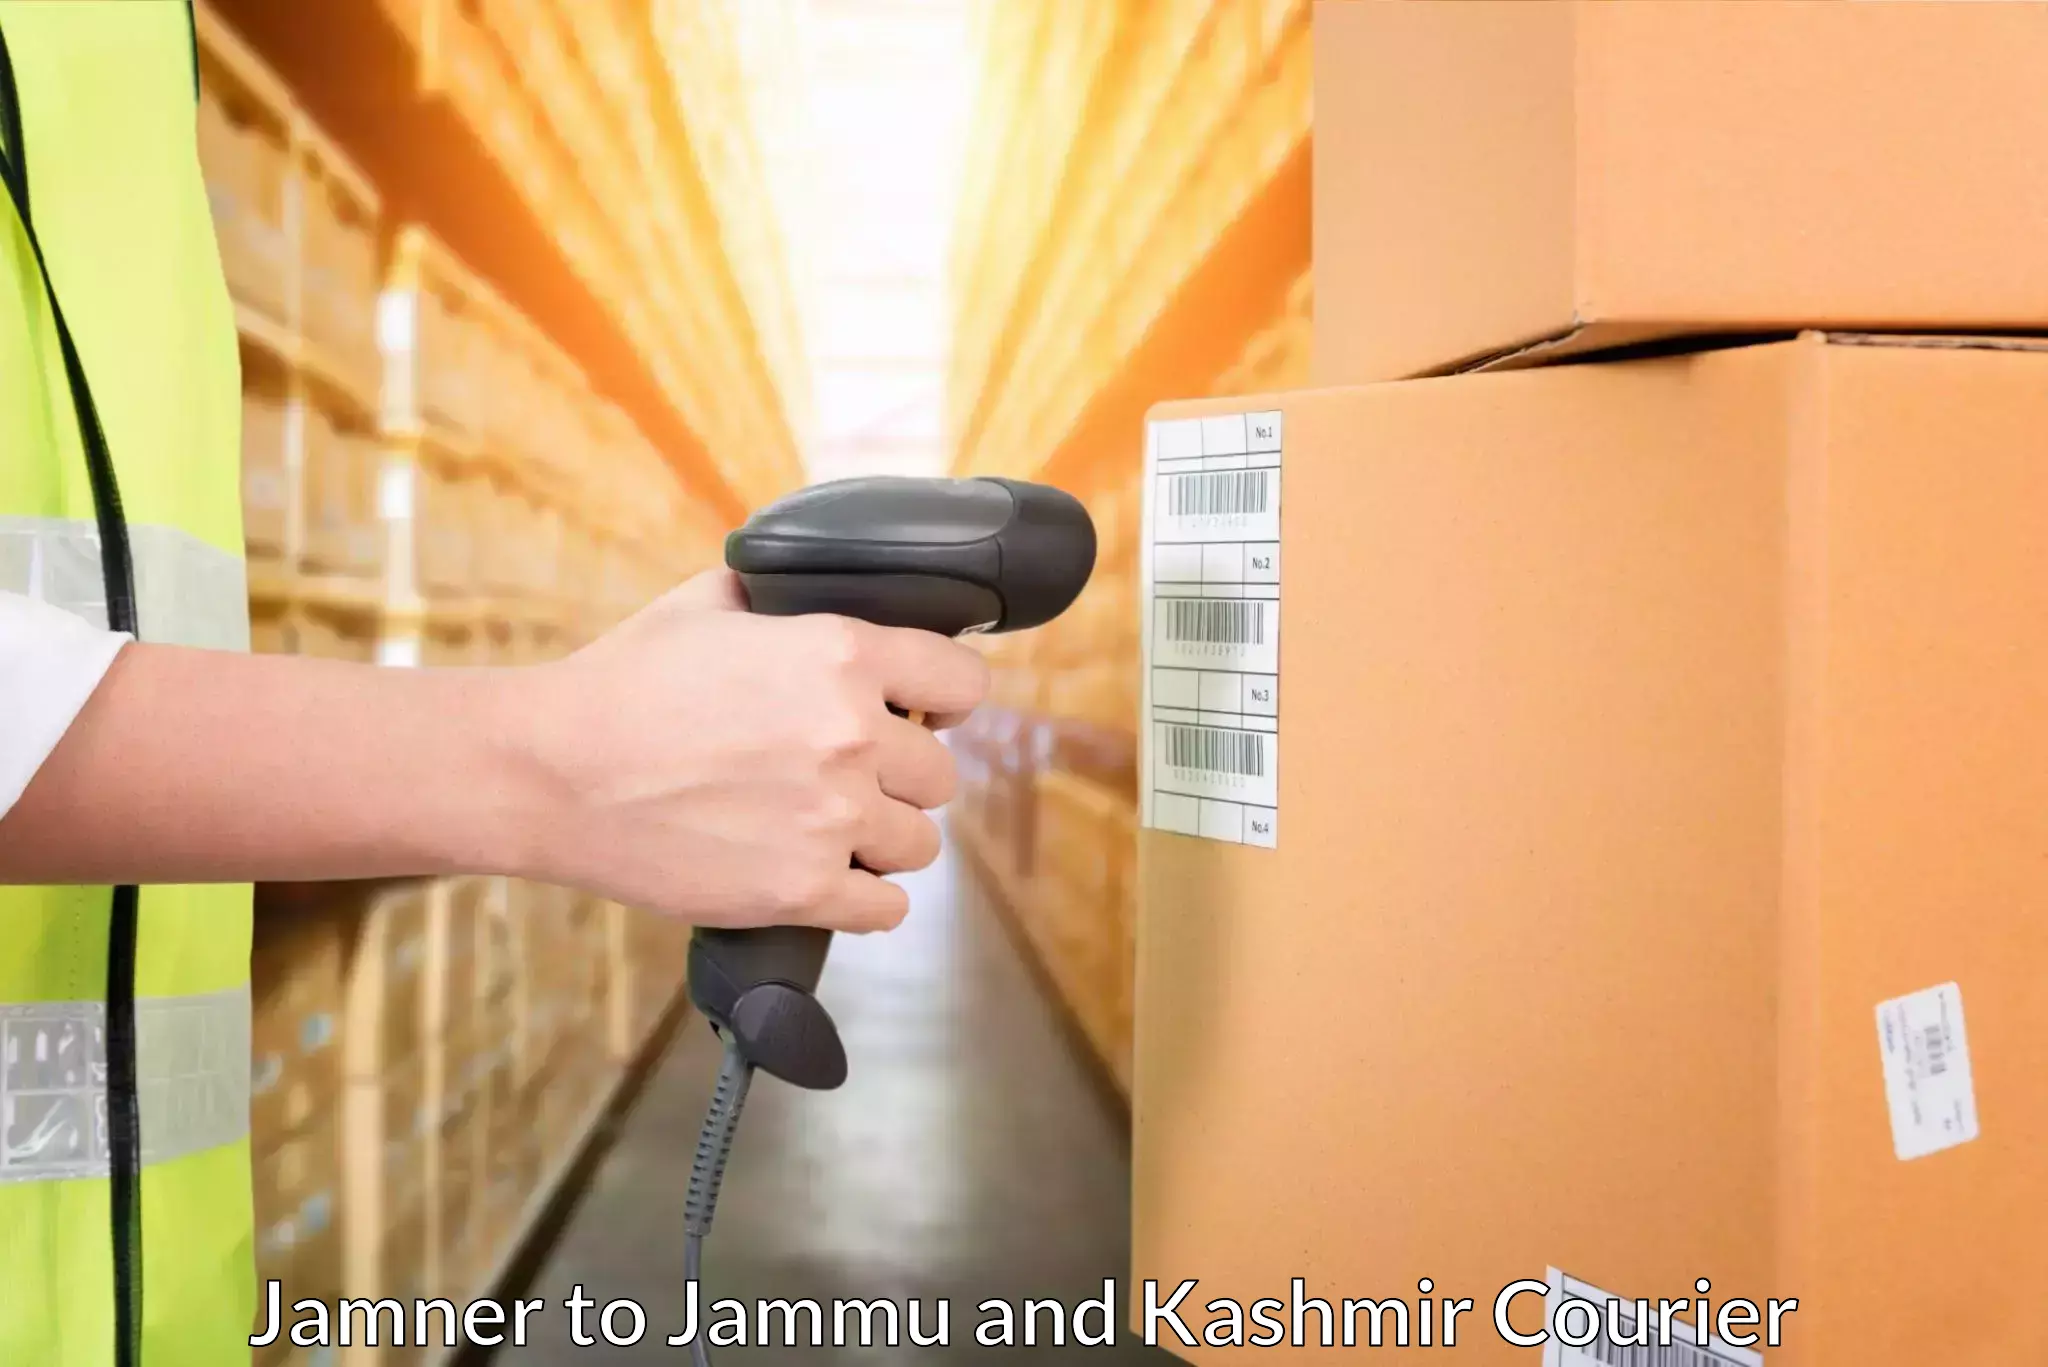 Quick dispatch service Jamner to Jammu and Kashmir